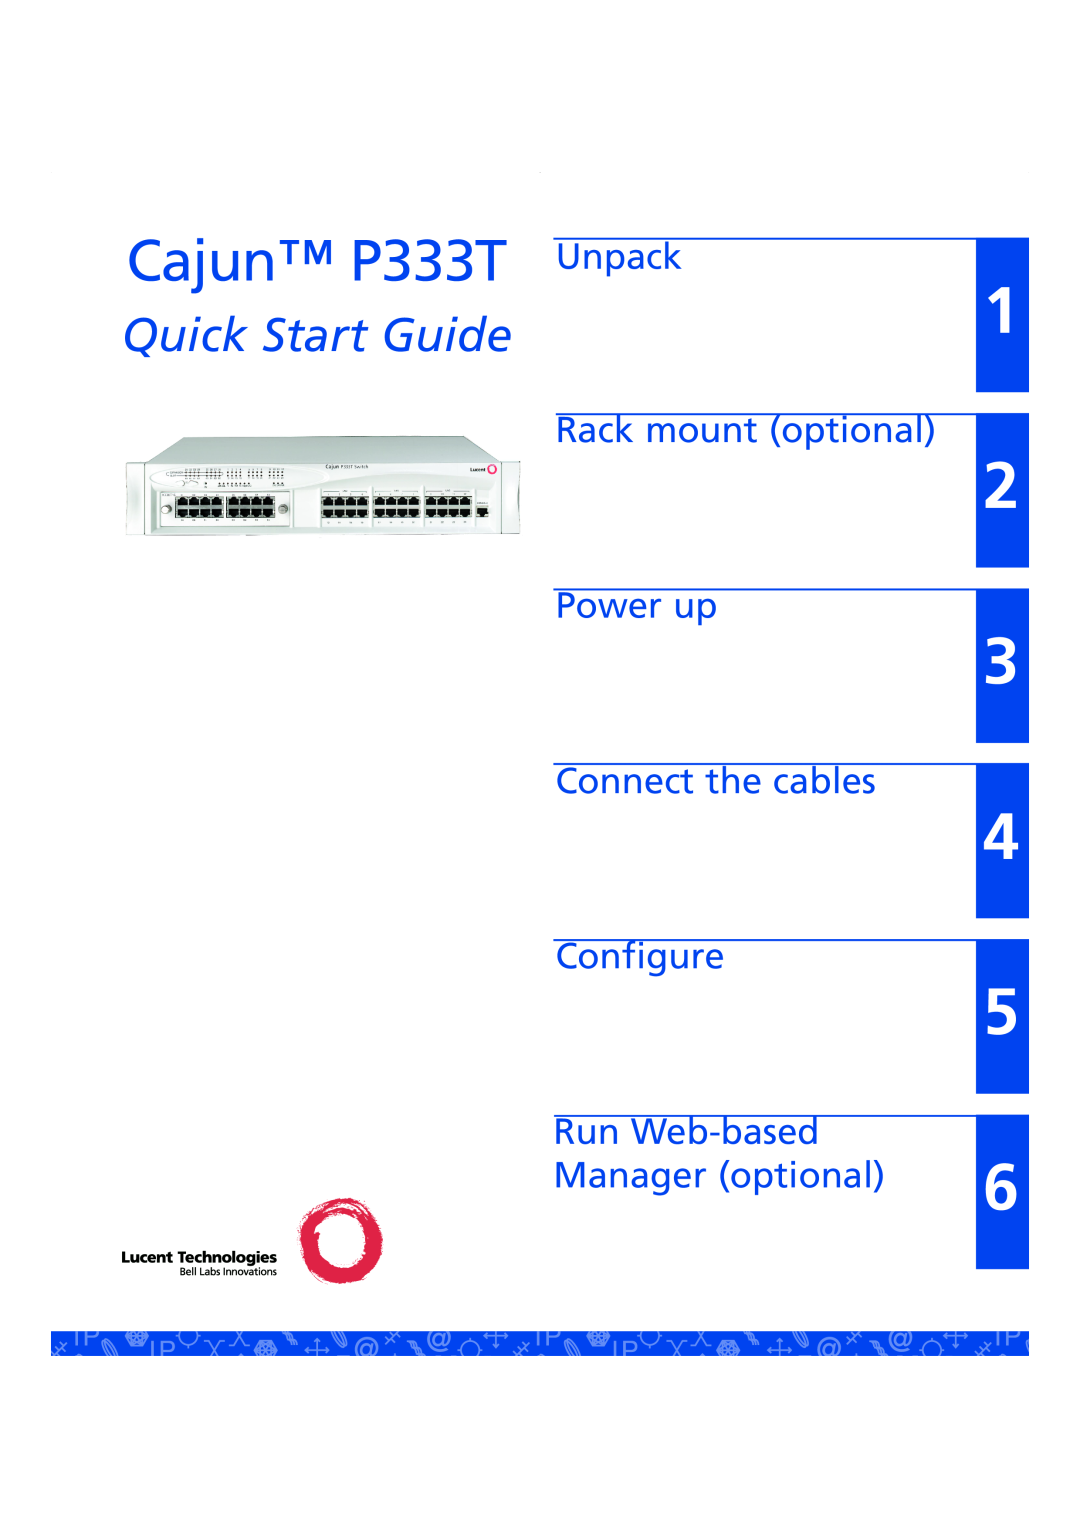 Lucent Technologies quick start Cajun P333T, Quick Start Guide, Unpack, Rack mount optional, Power up, Configure 